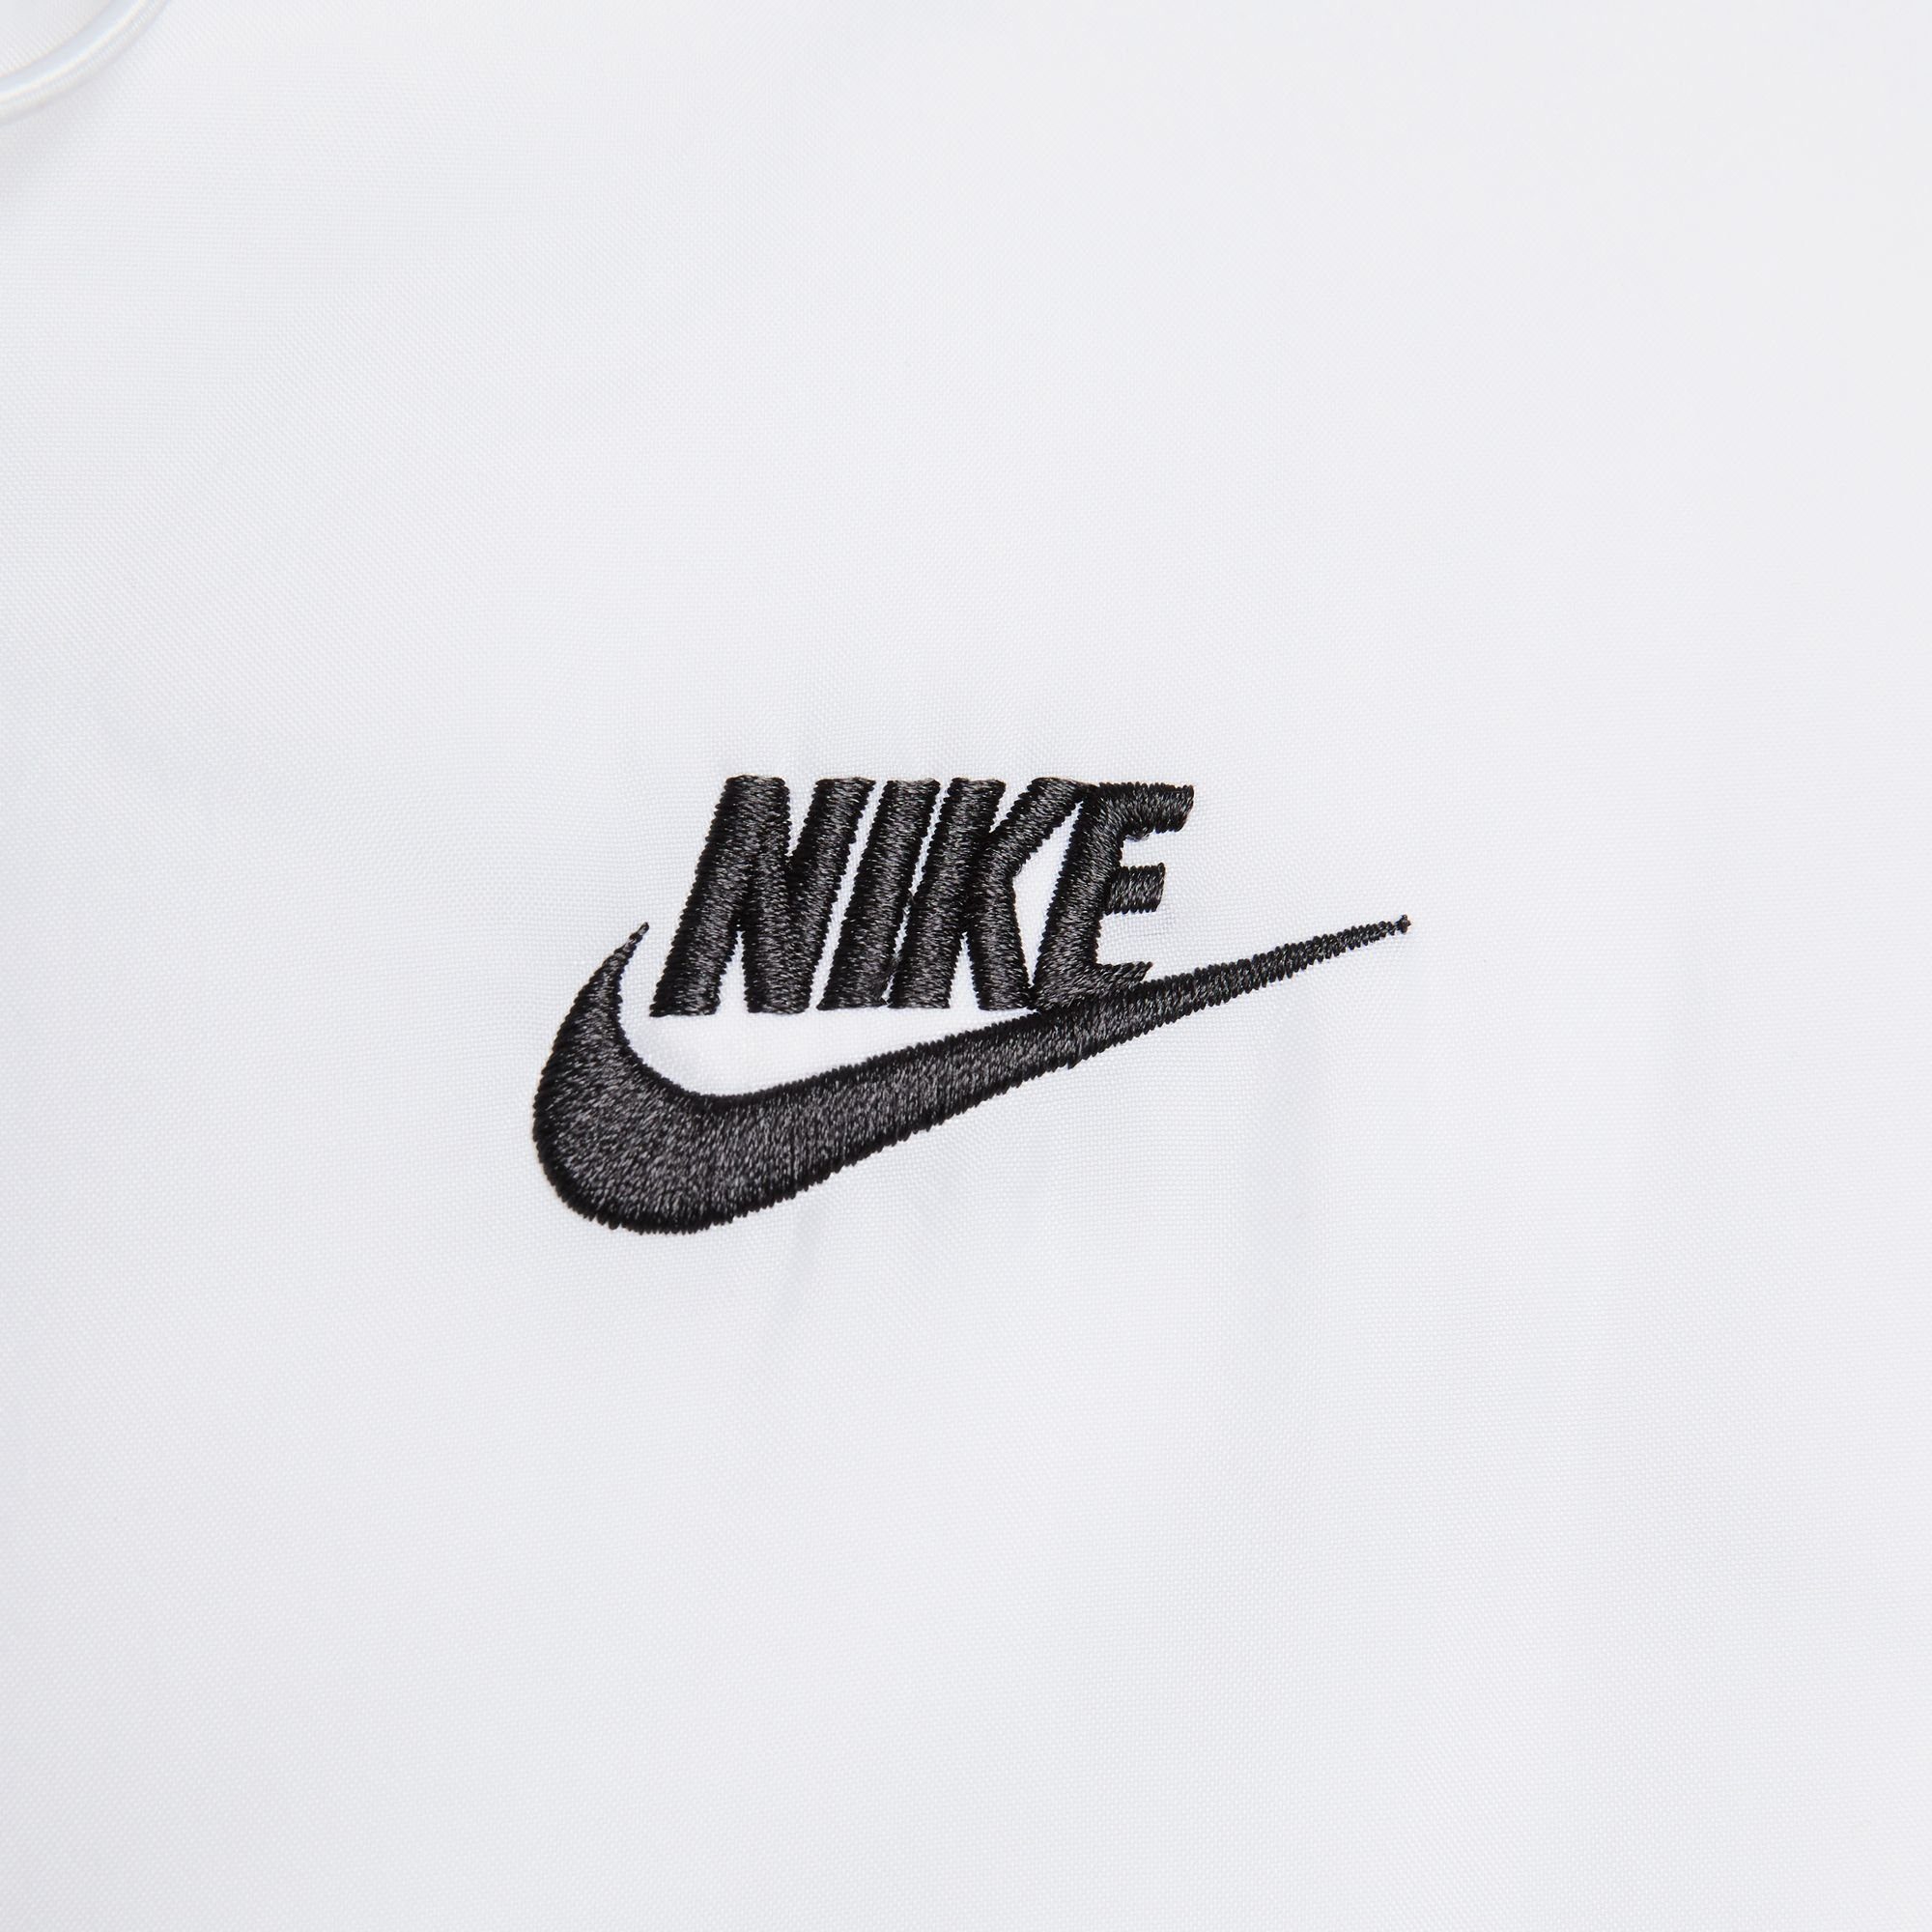 Nike Sportswear THERMA-FIT PARKA CLASSIC WOMEN'S WHITE/BLACK Steppmantel